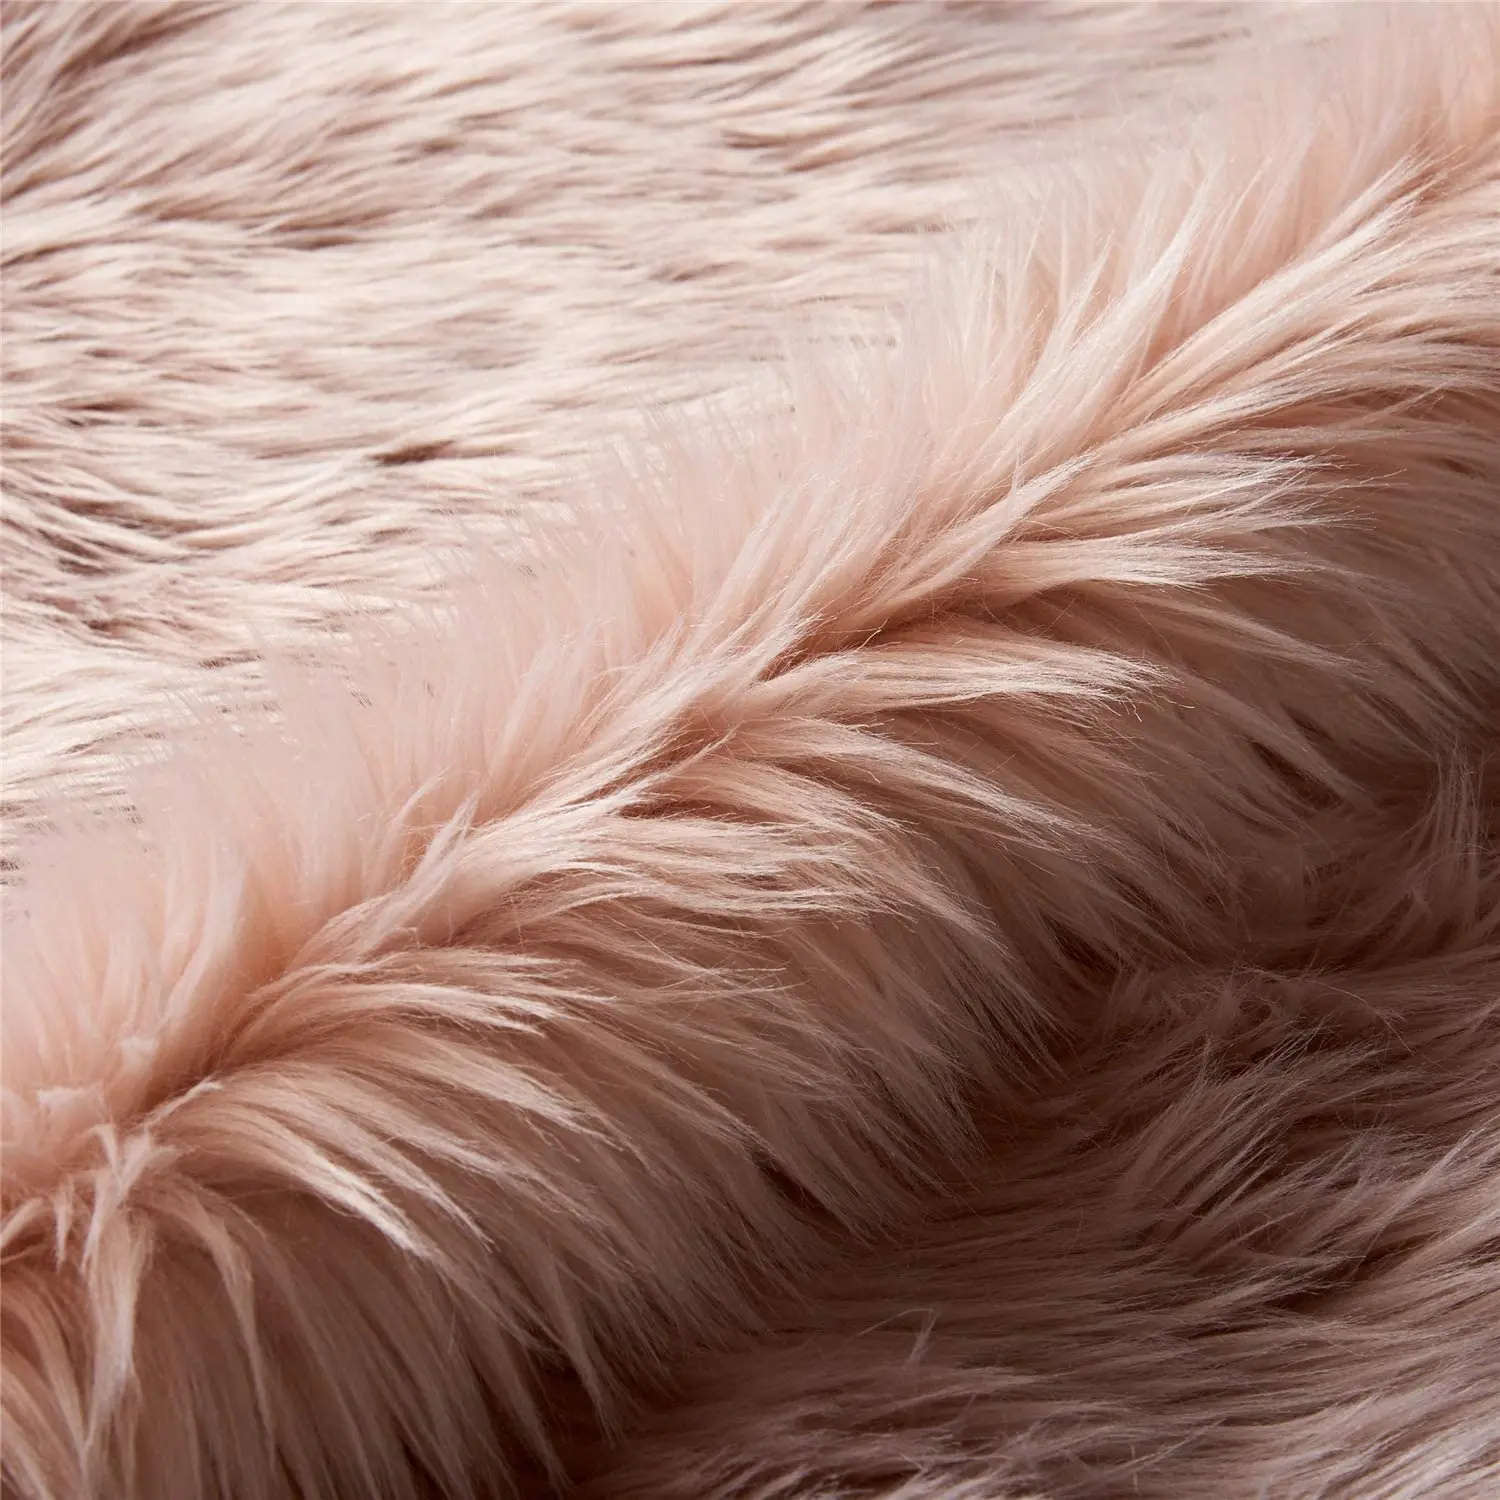 China wholesale Long Pile sheepskin microfiber artificial fur for Garment Home Textile Faux Fur Fabric